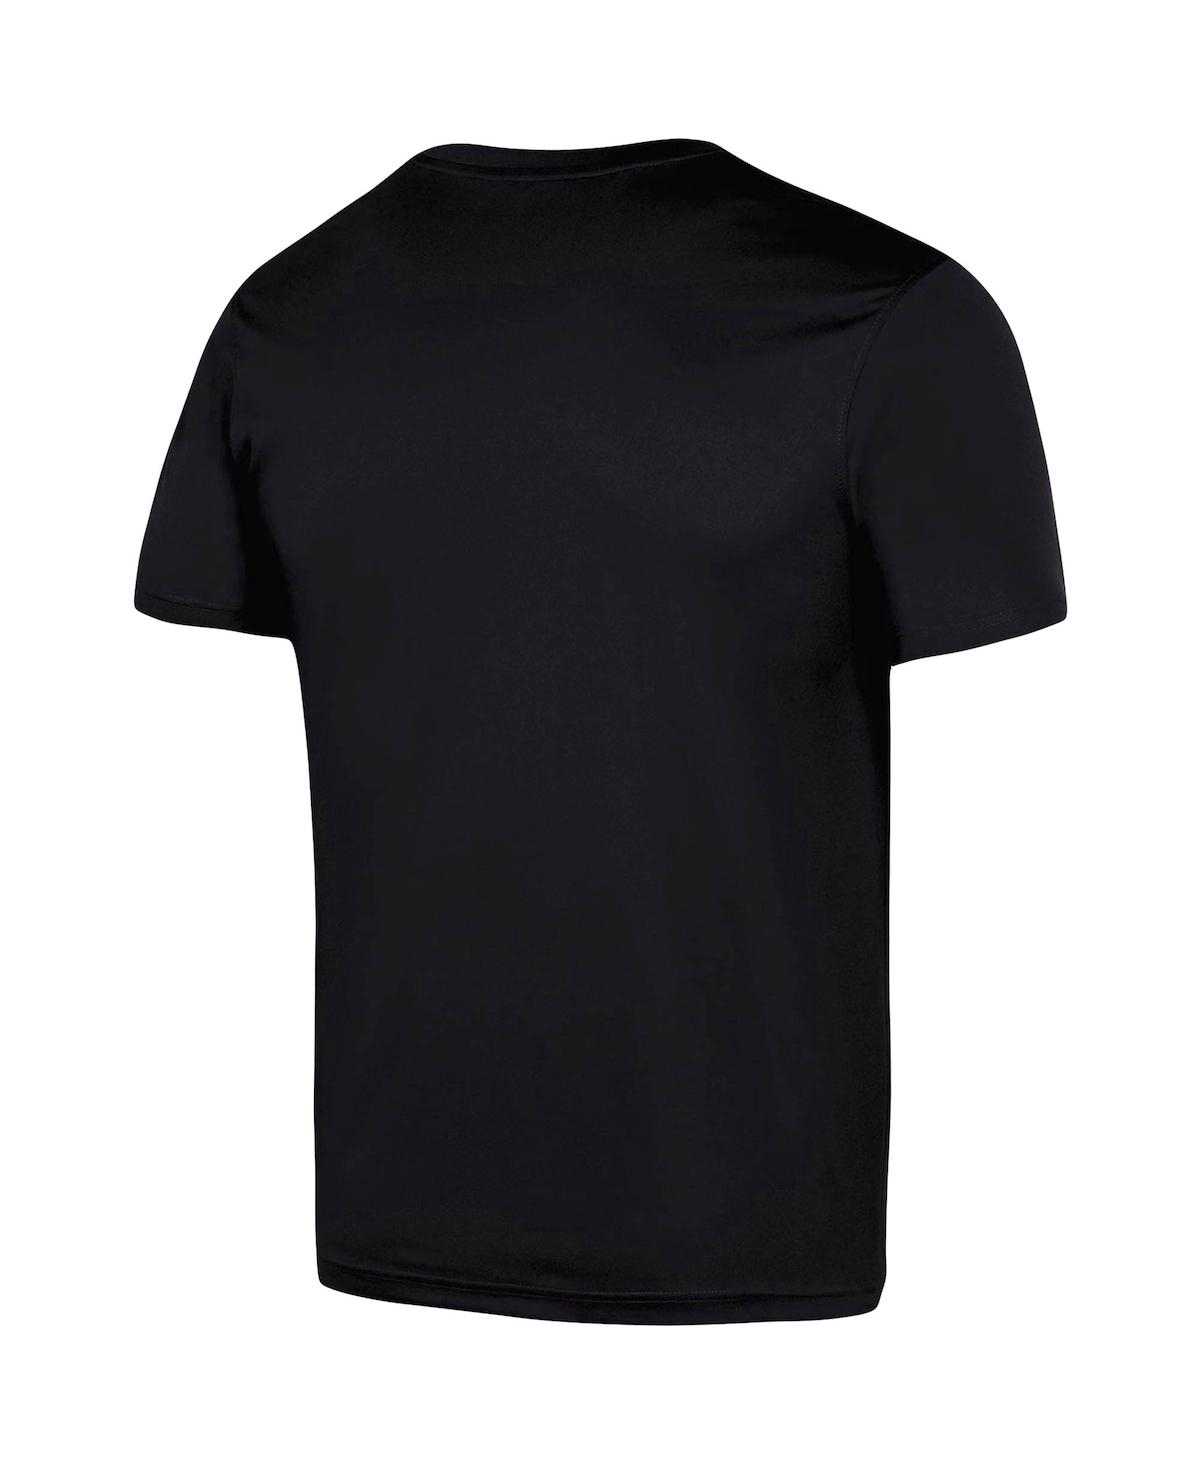 Shop Under Armour Men's  Black Wisconsin Badgers School Logo Performance Cotton T-shirt